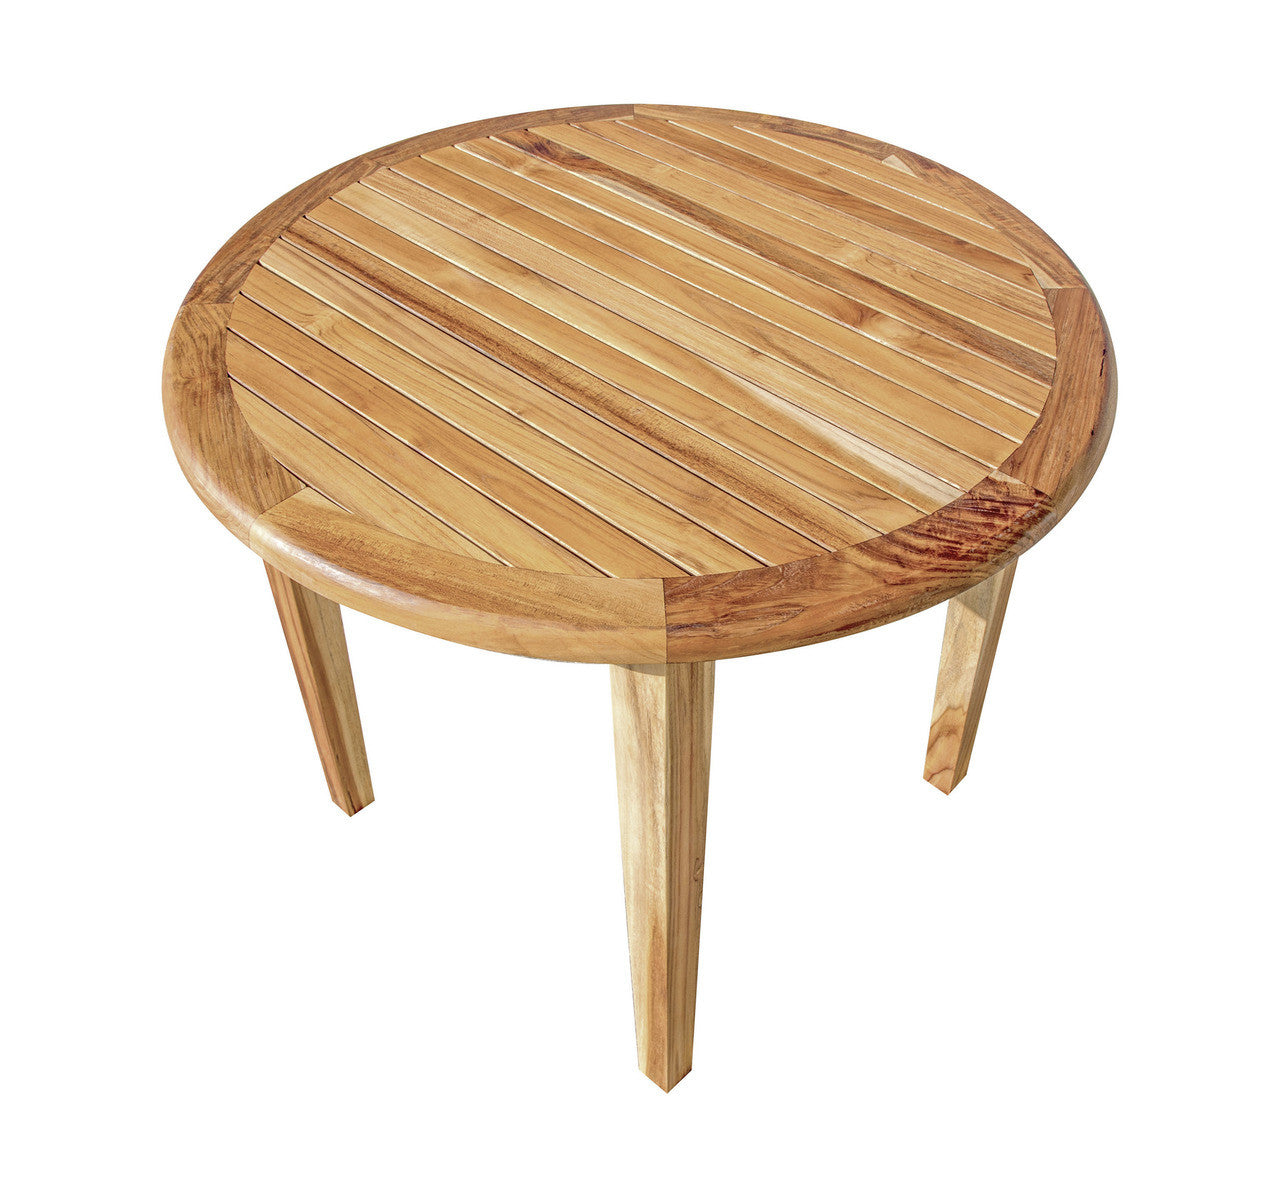 EcoDecors® Oasis® 36" Teak Wood Round Table in EarthyTeak Finish